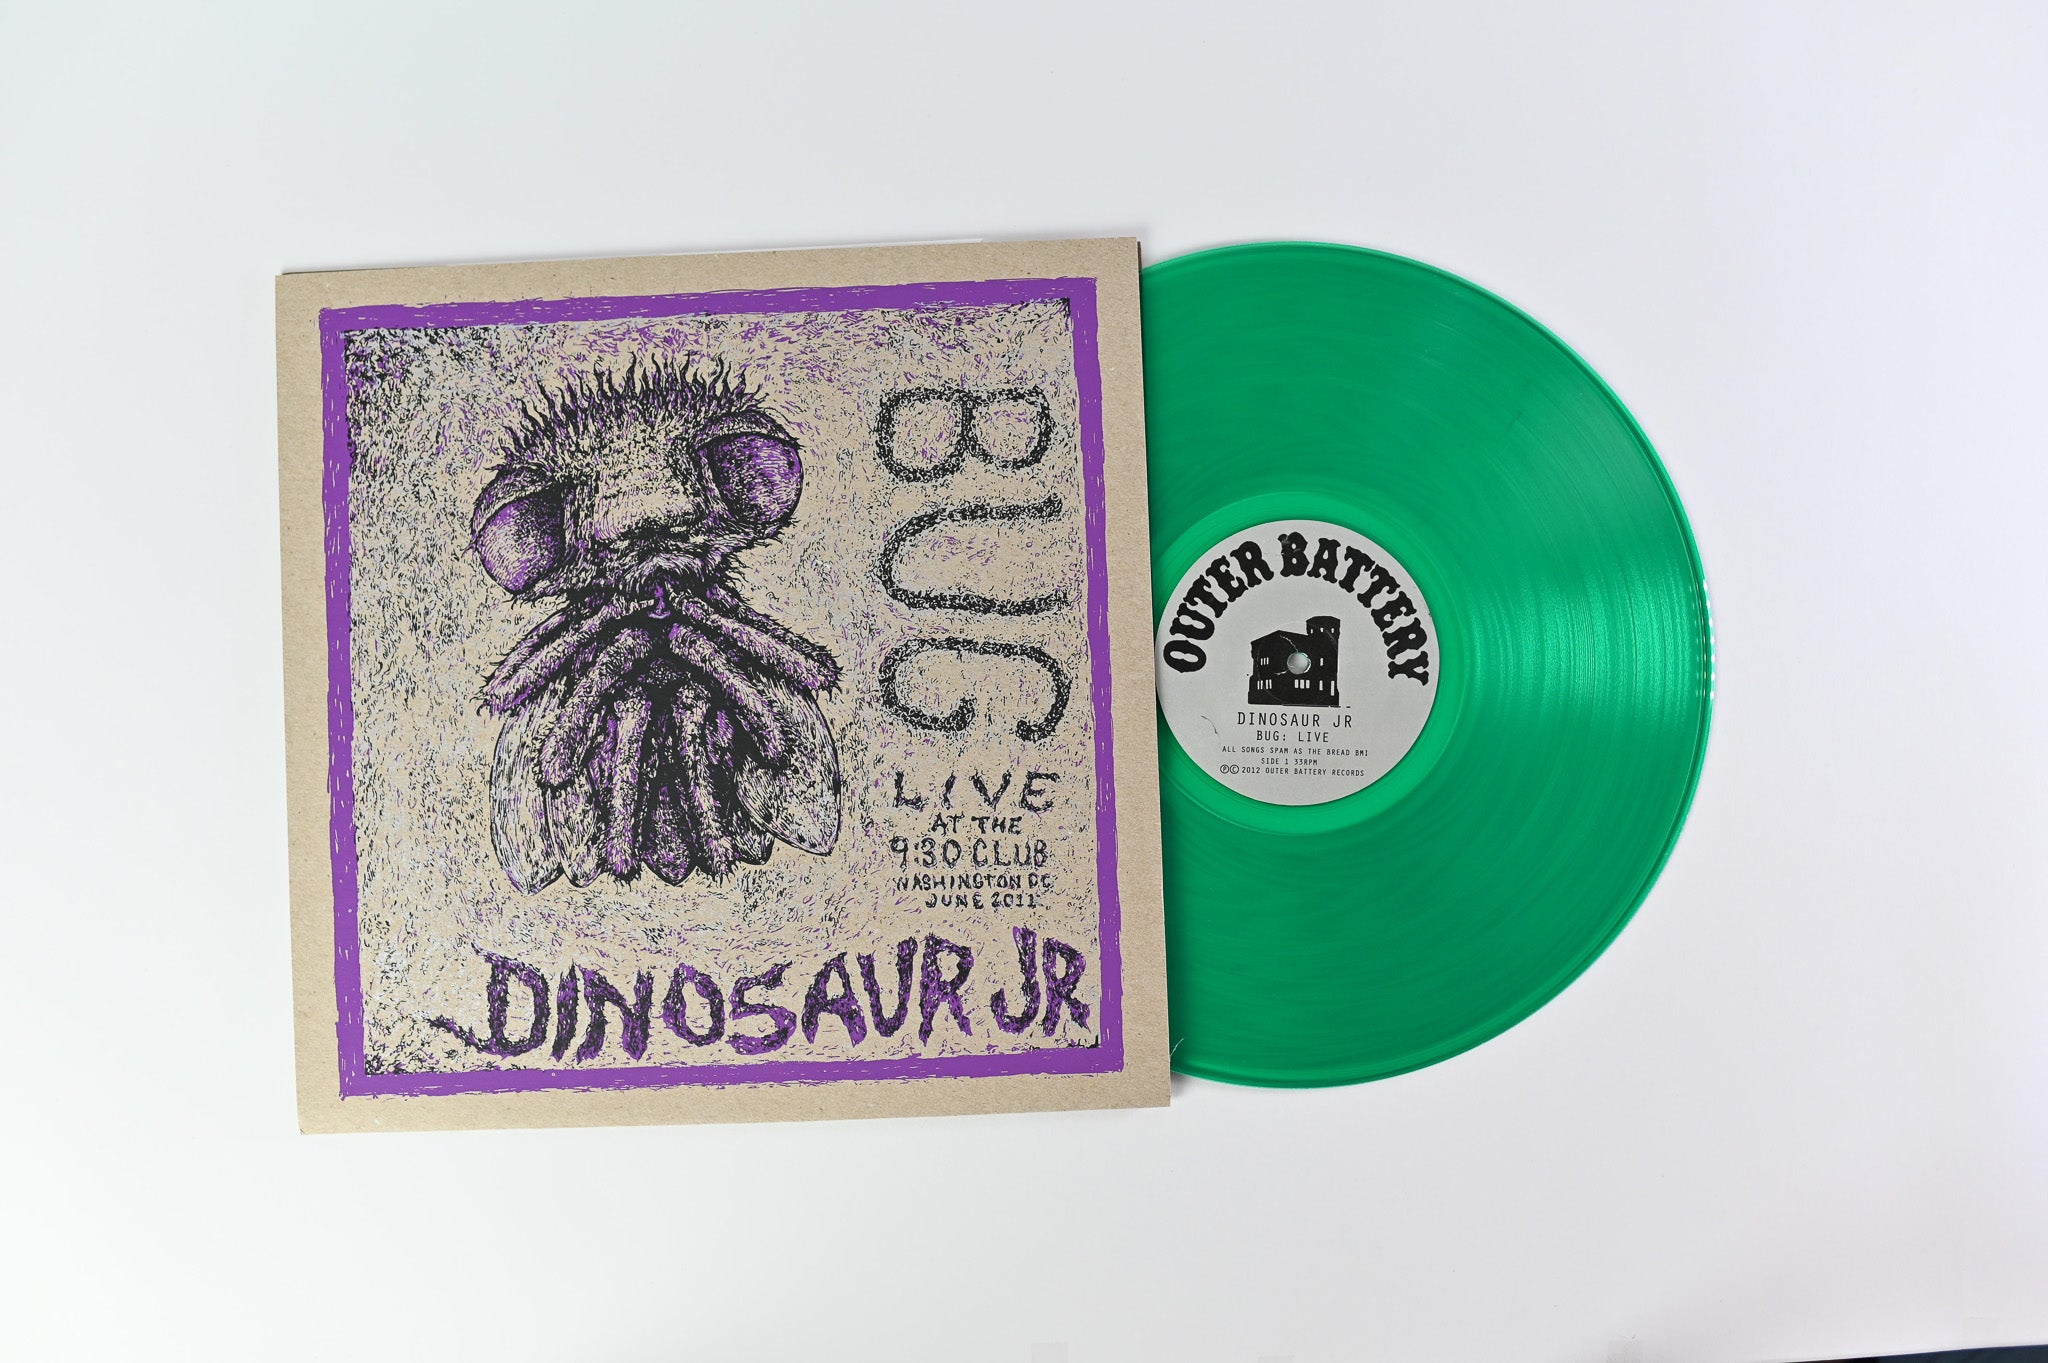 Dinosaur Jr. - Bug: Live At The 9:30 Club, Washington, DC, June 2011 on Outer Battery Ltd Green Vinyl